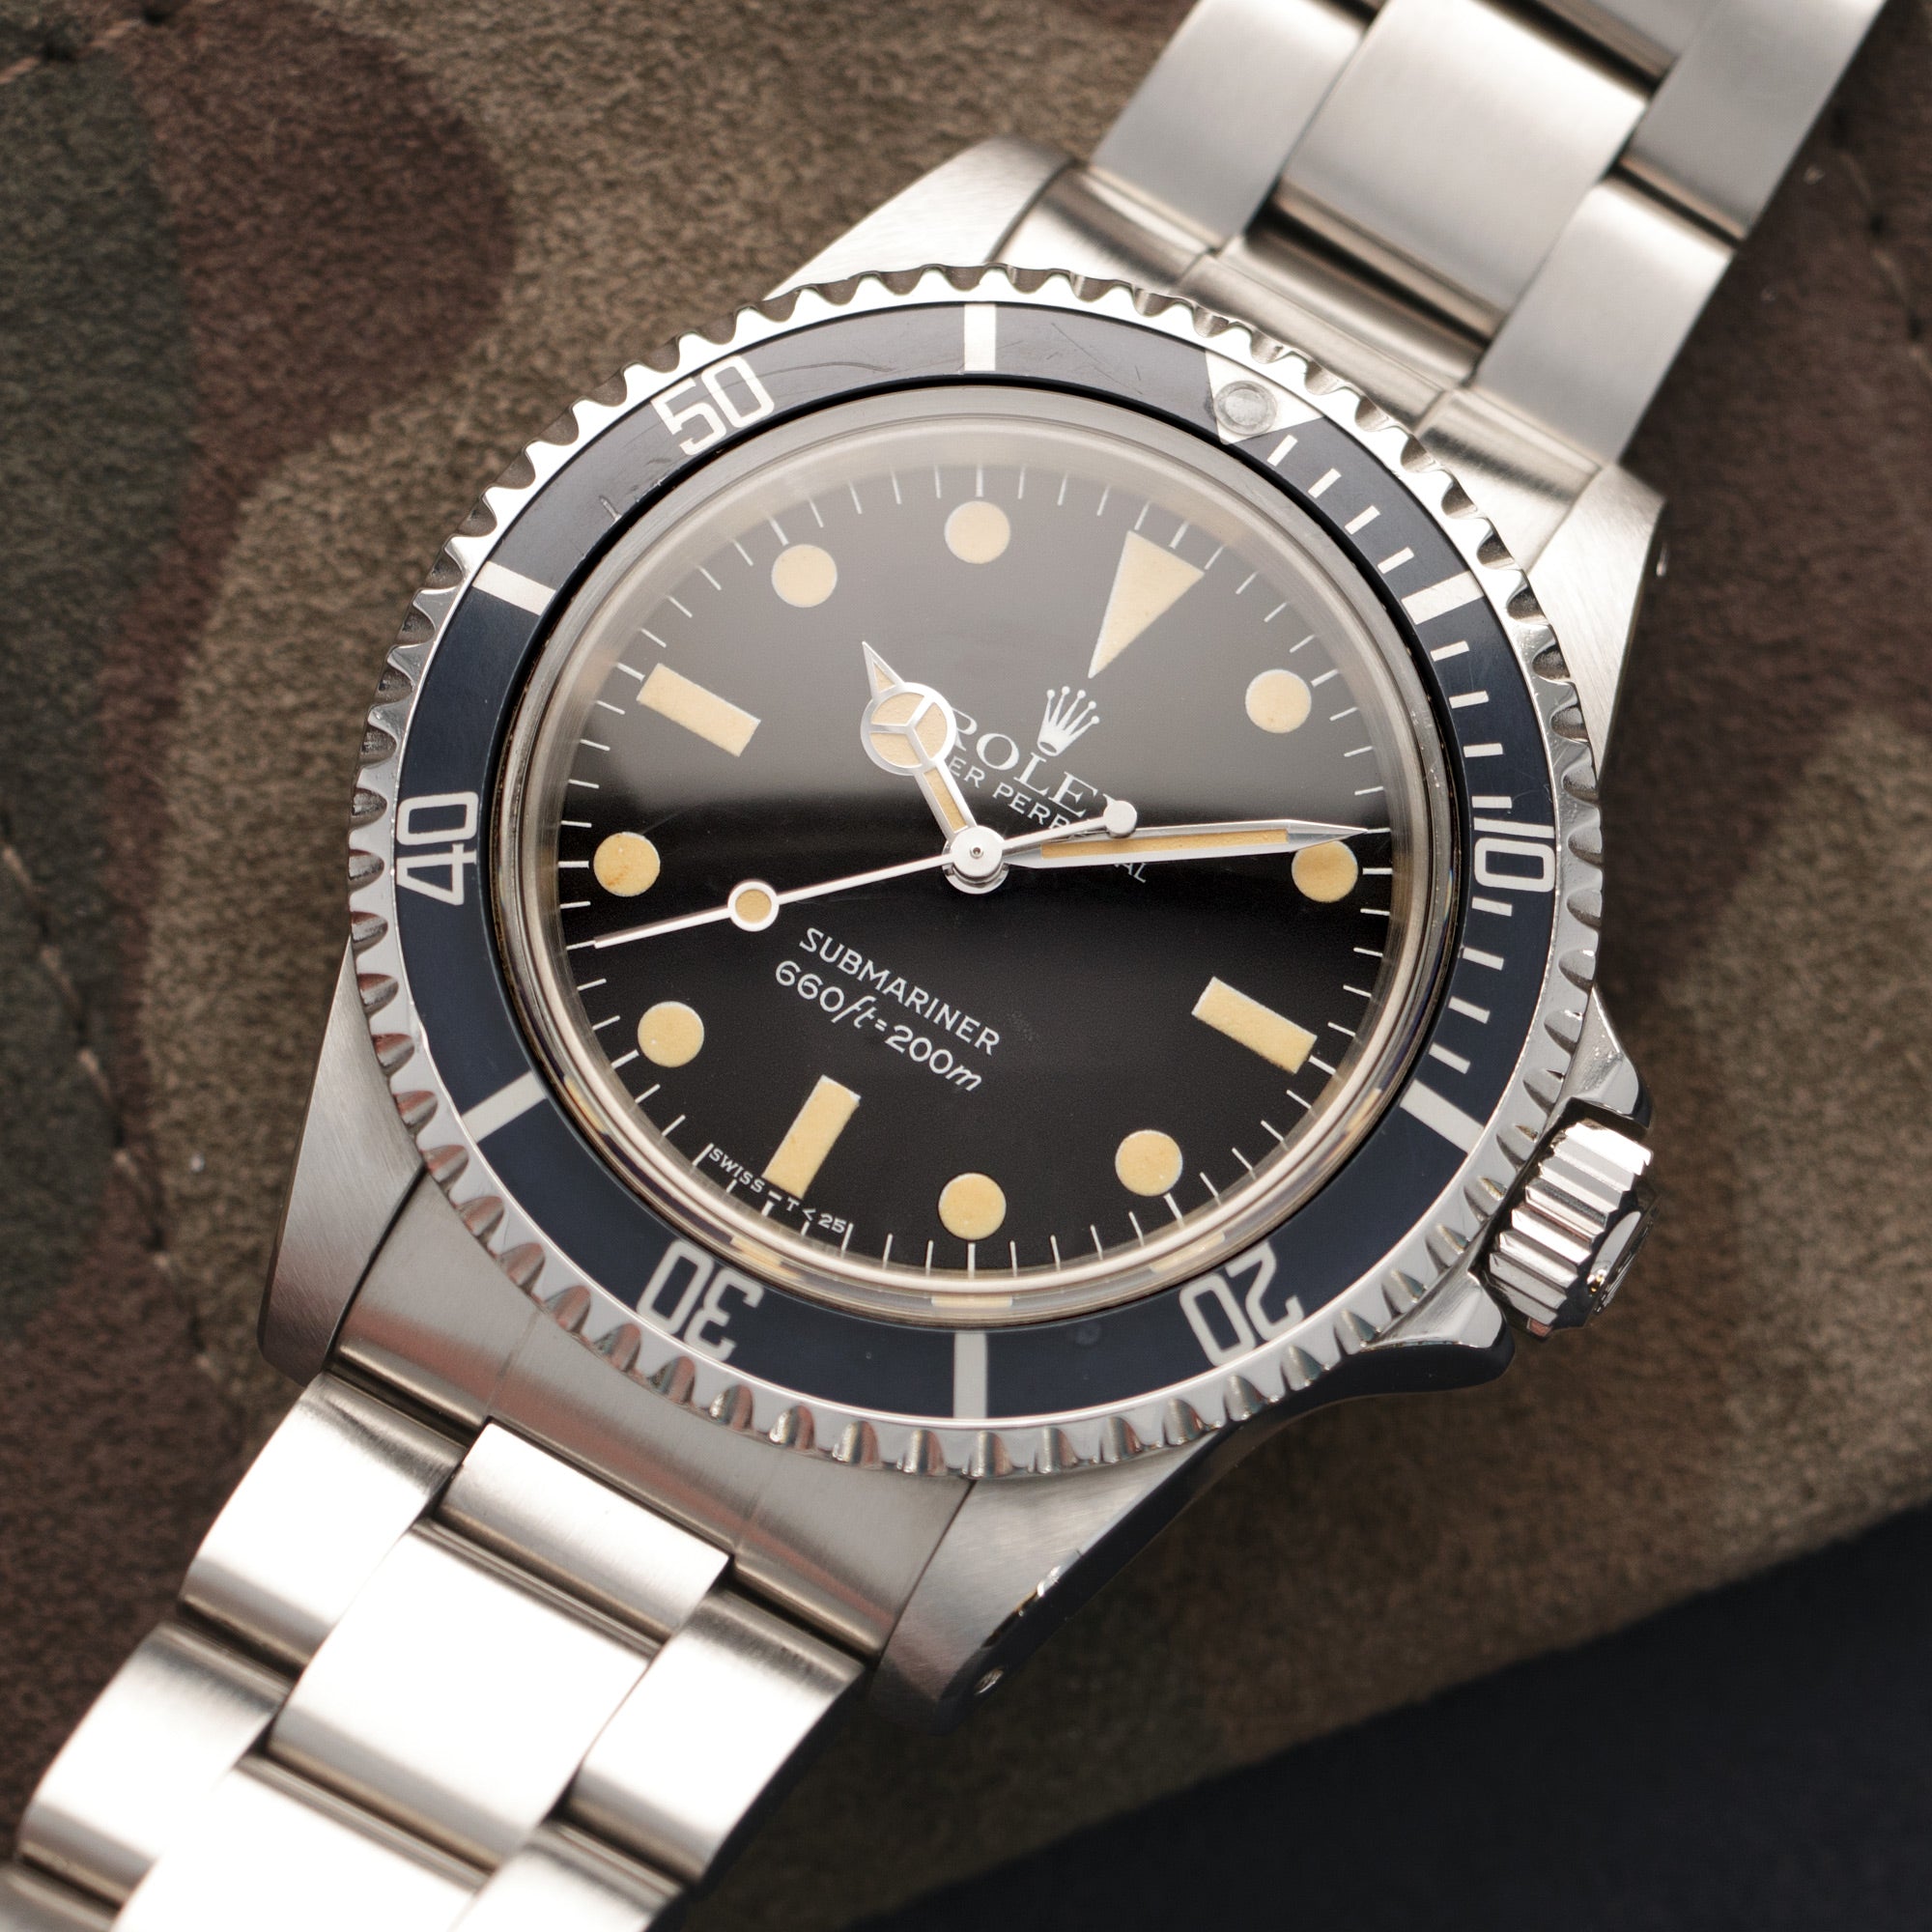 Rolex - Rolex Submariner Maxi Dial Watch Ref. 5513 - The Keystone Watches